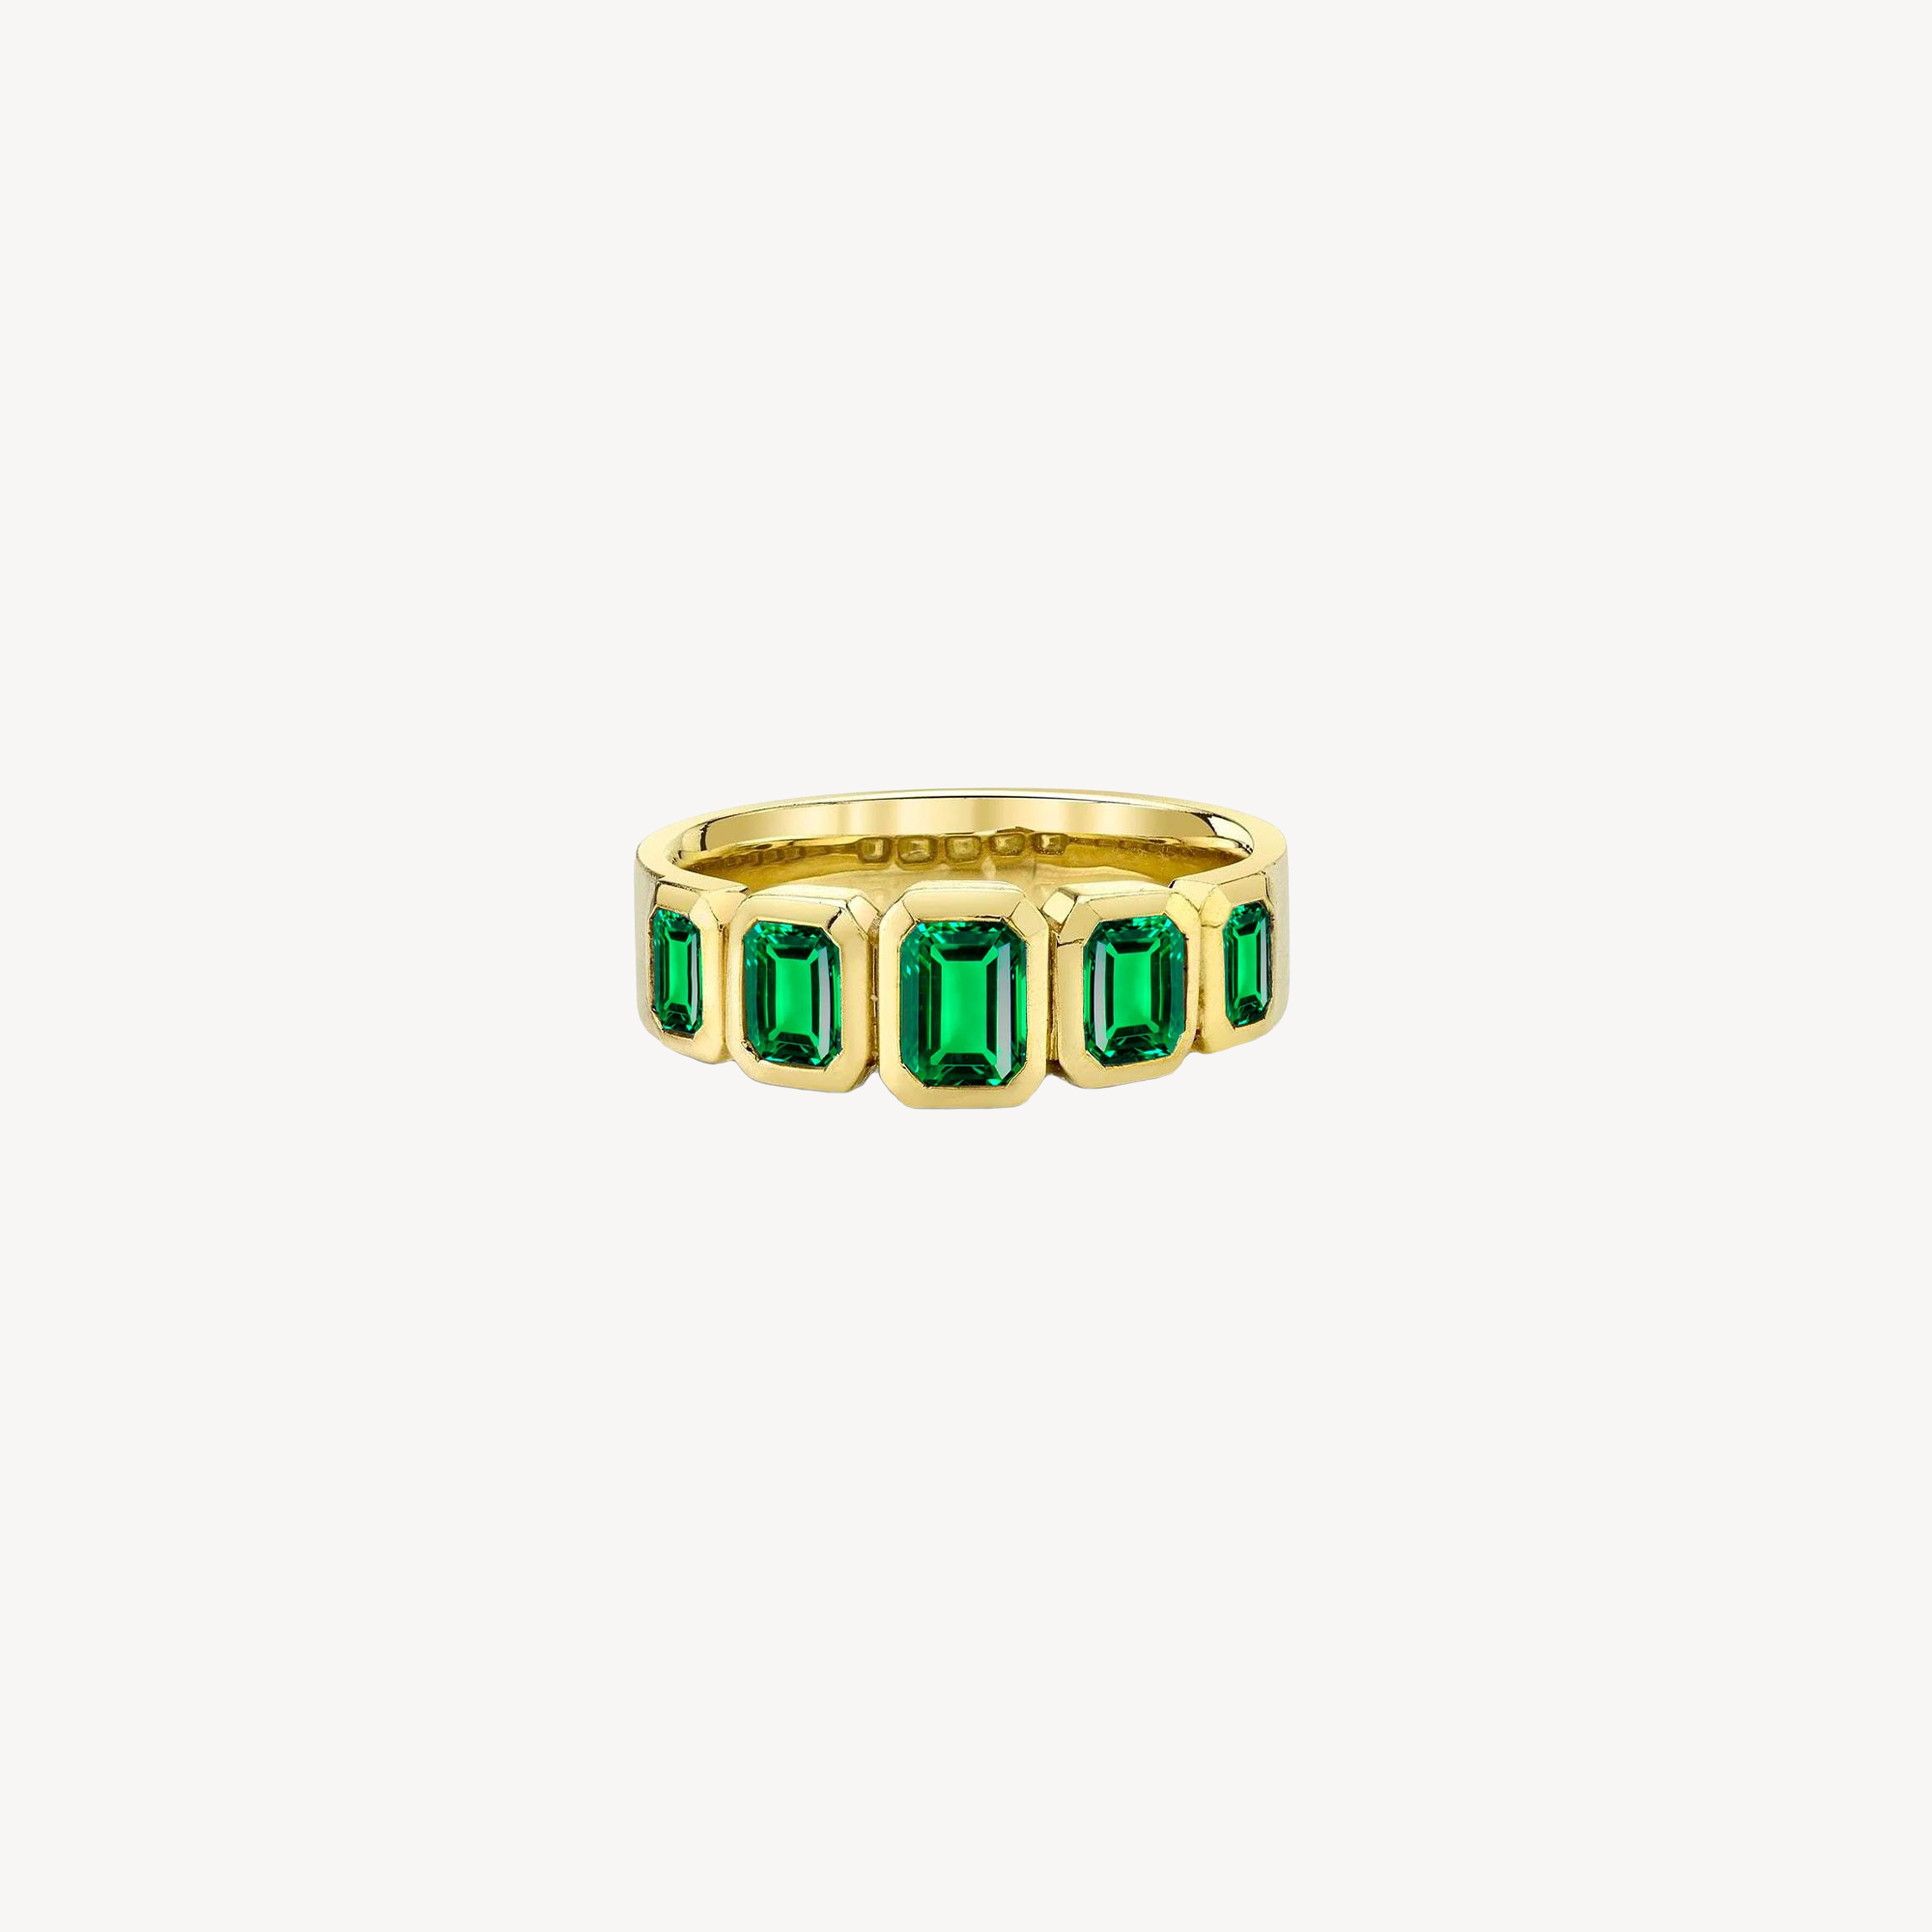 Graduated Emerald Cut Emerald Ring